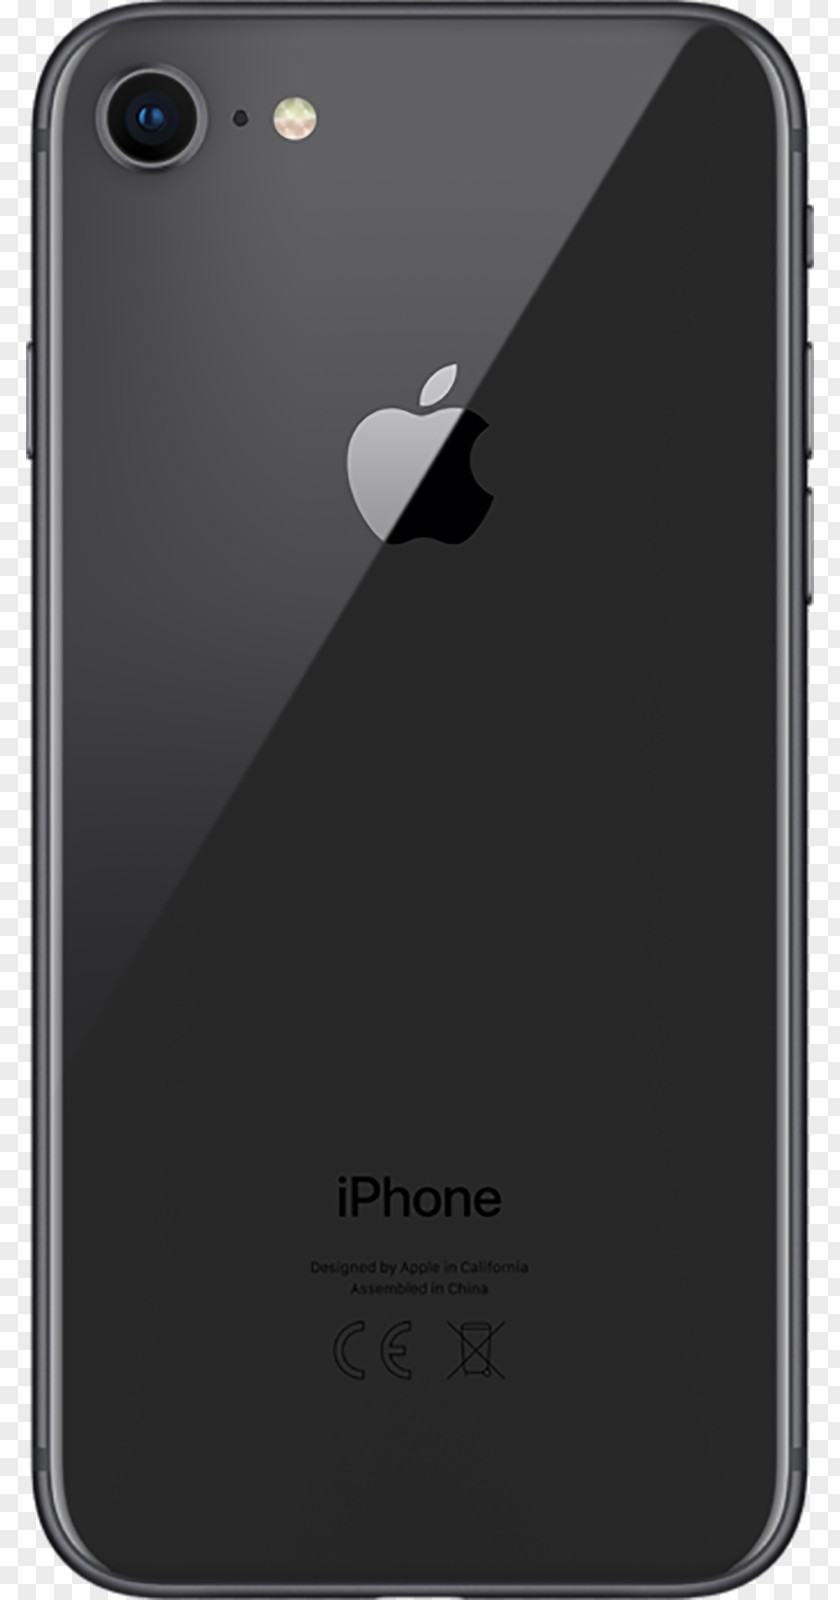 Iphone Apple IPhone 8 Plus A11 Retina Display PNG